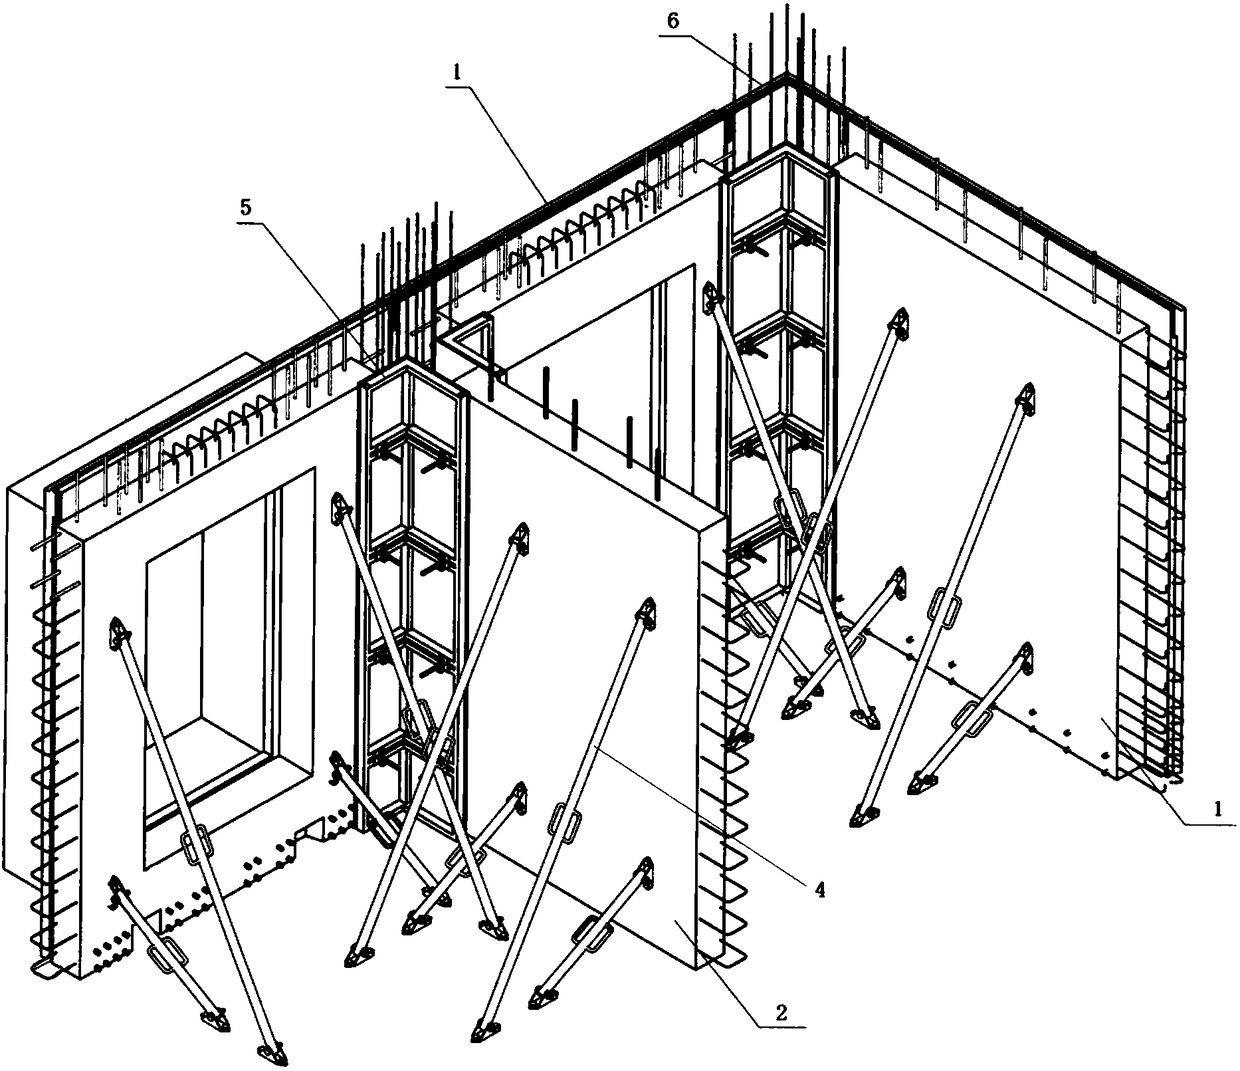 Construction method of prefabricated wallboard